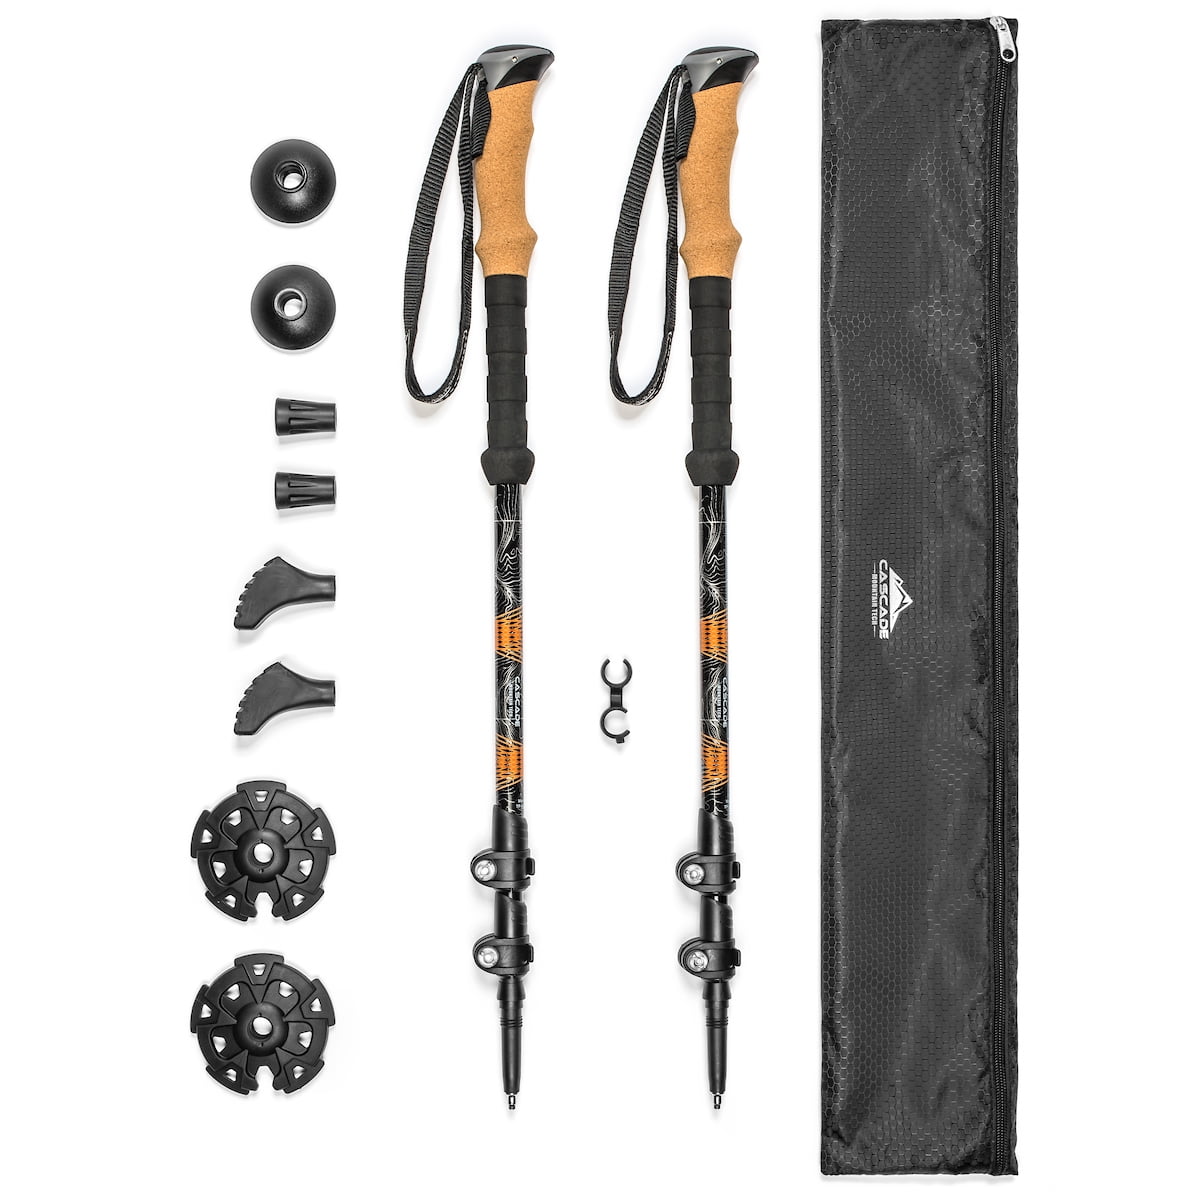 ENKEEO Extendable Hiking Stick Aluminum Alloy, 3 Sections, Anti-shock, Ergonomic Grip, Adjustable Wrist Strap, for Trekking, Hiking, Travel 